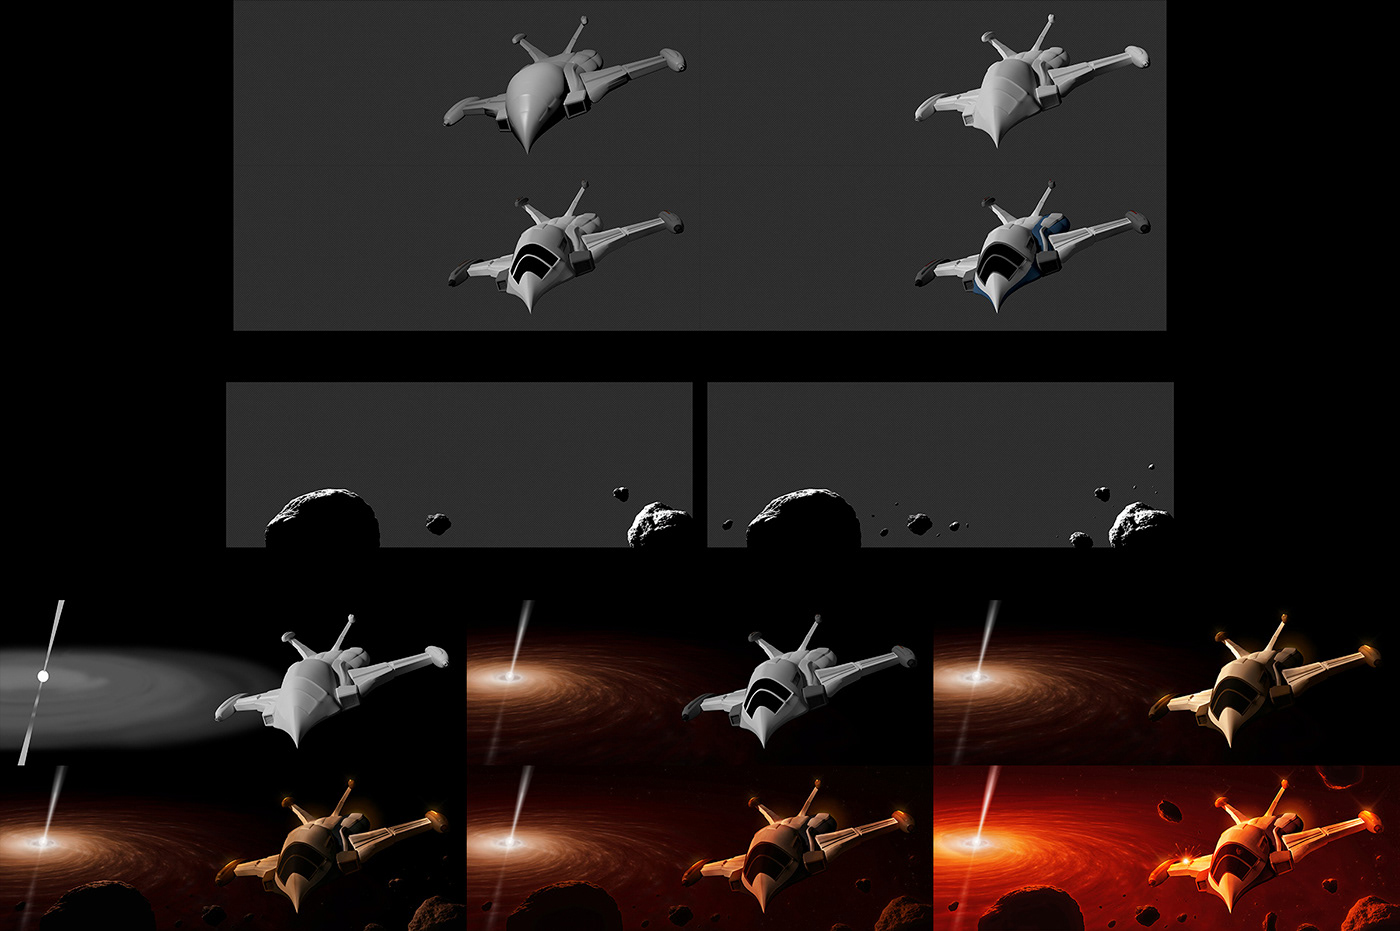 Scifi Sci Fi science fiction Sciencefiction neutronstar Neutron Star spaceship astronomy asteroid 3d modeling